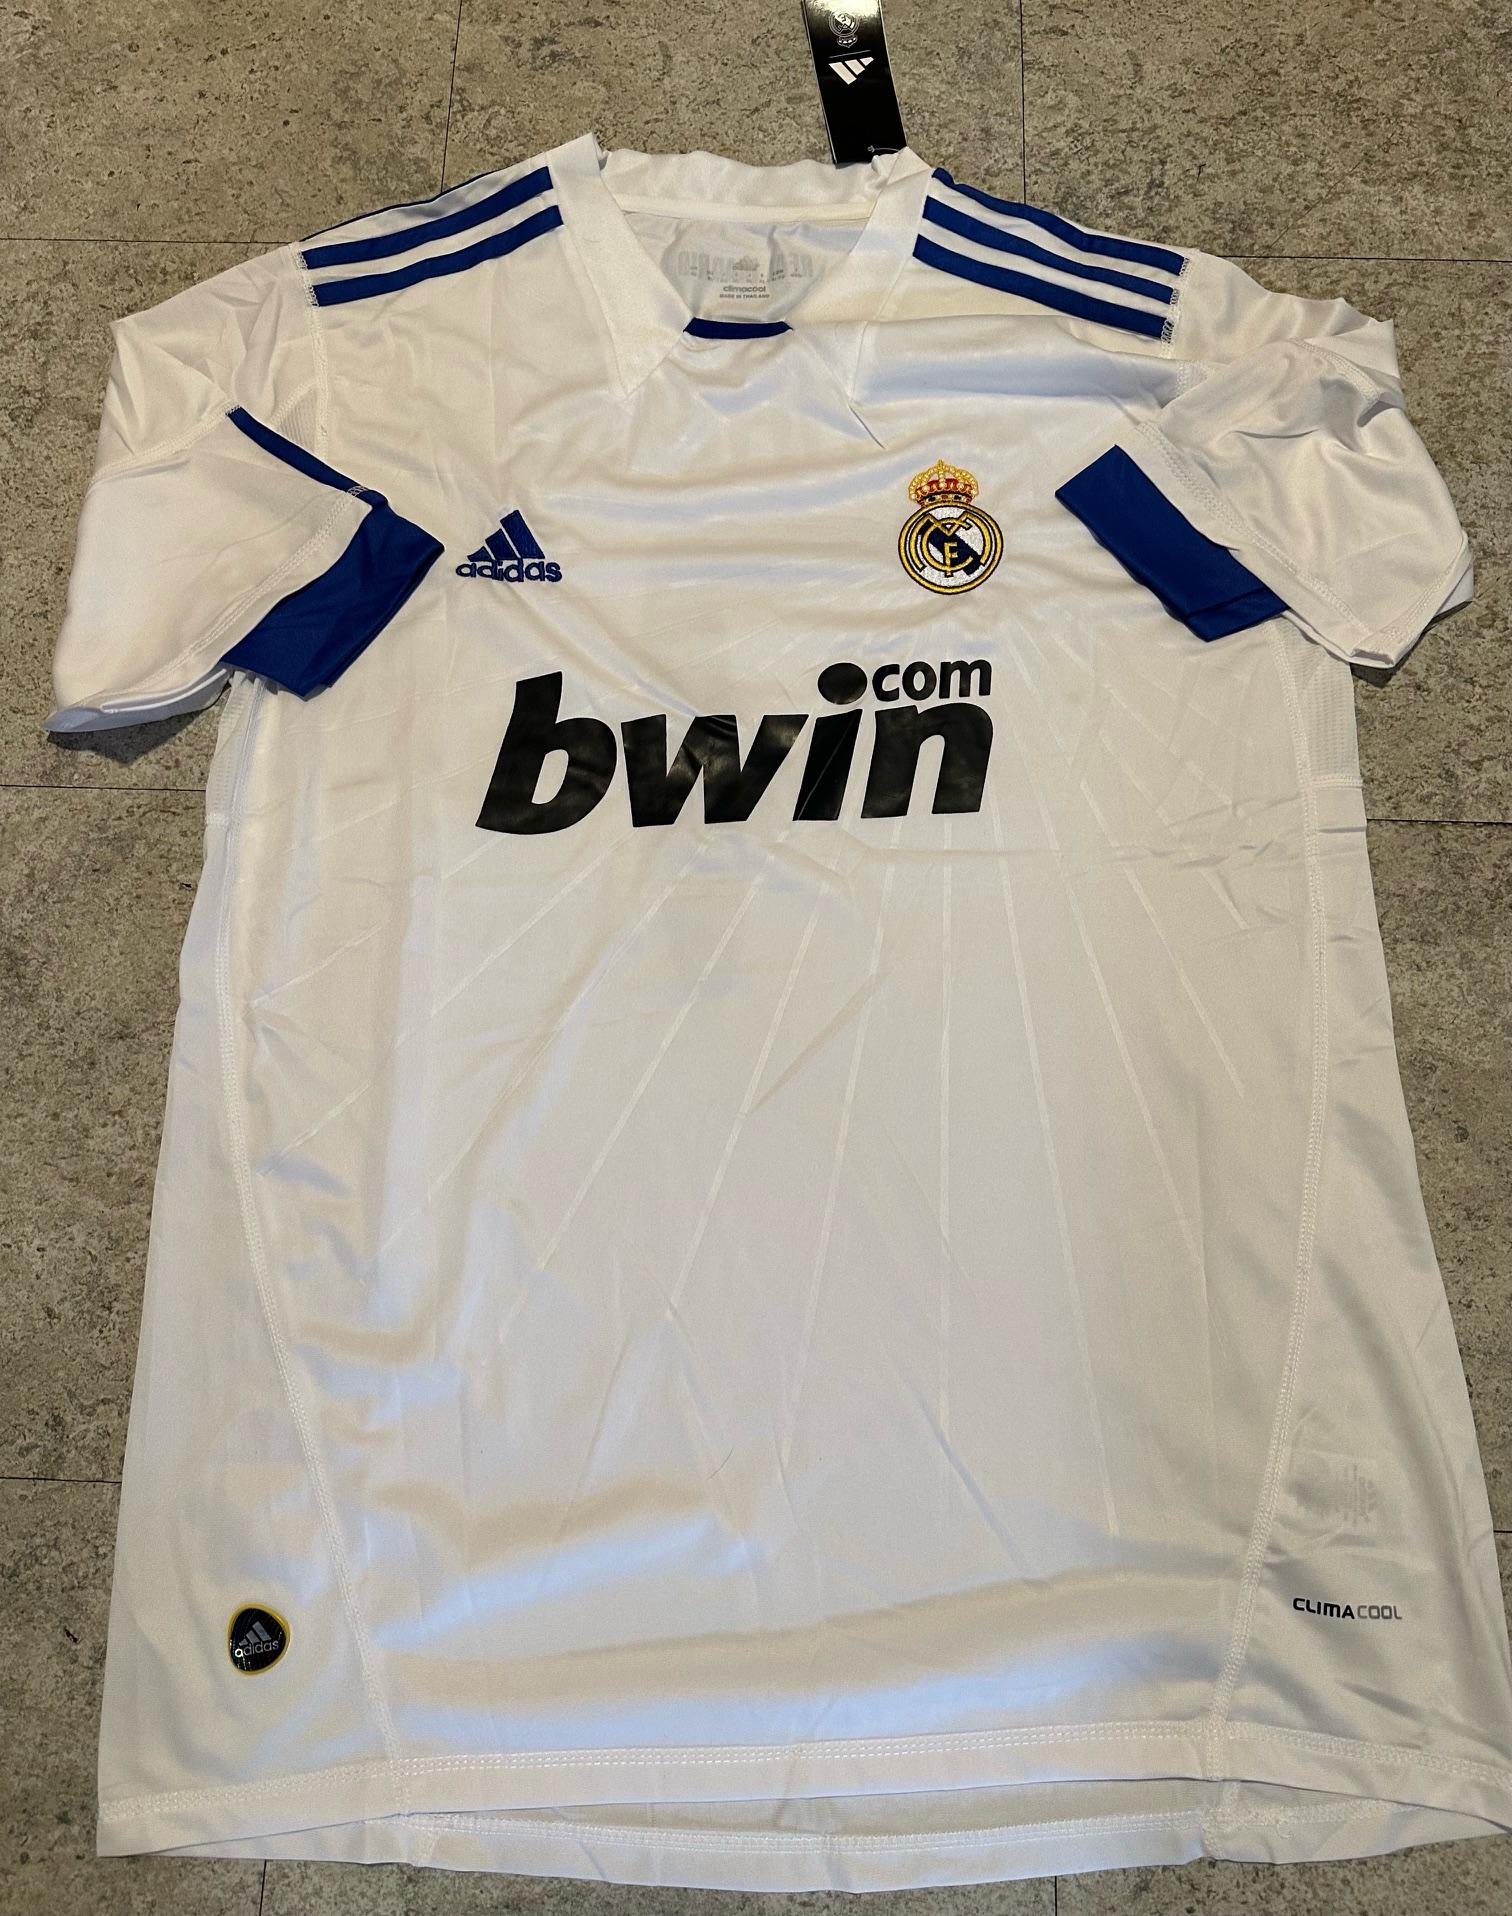 Cristiano Ronaldo Real Madrid Adidas Autographed 2010-11 Home Soccer Jersey GA coa